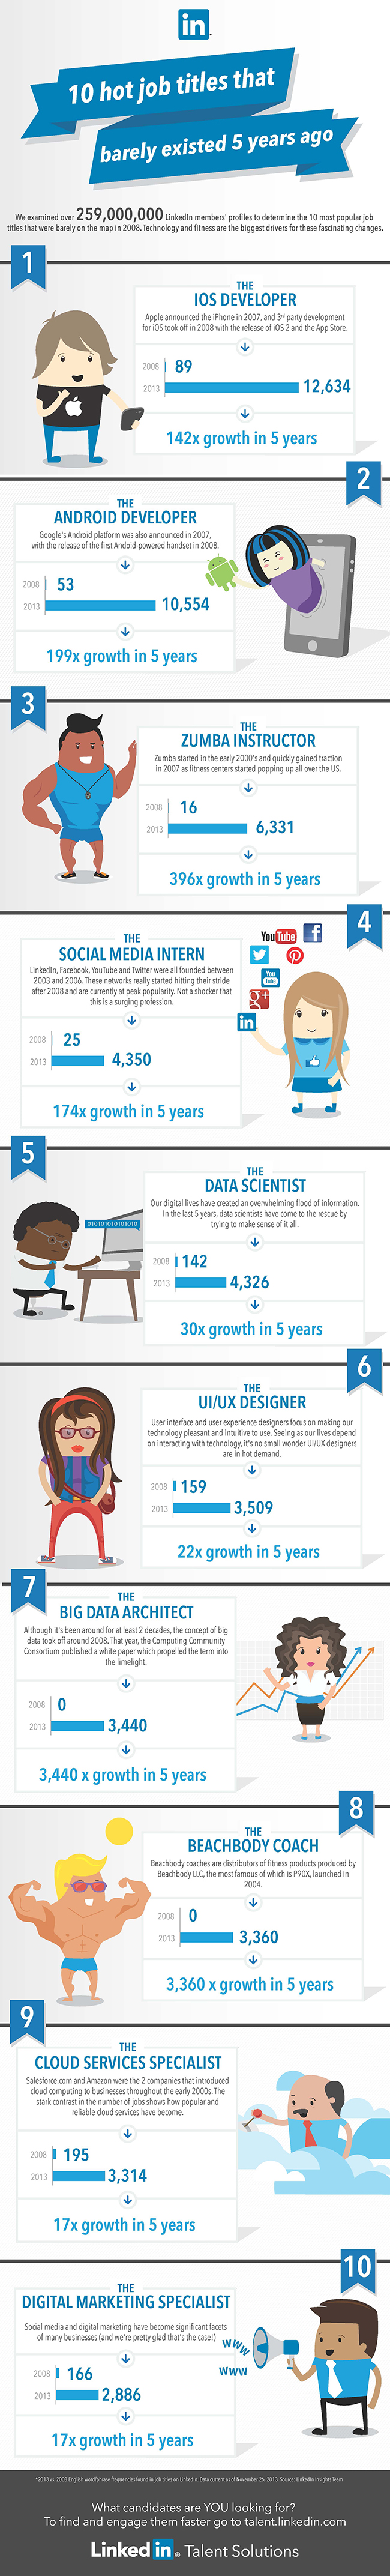 LinkedIn_visually Careers